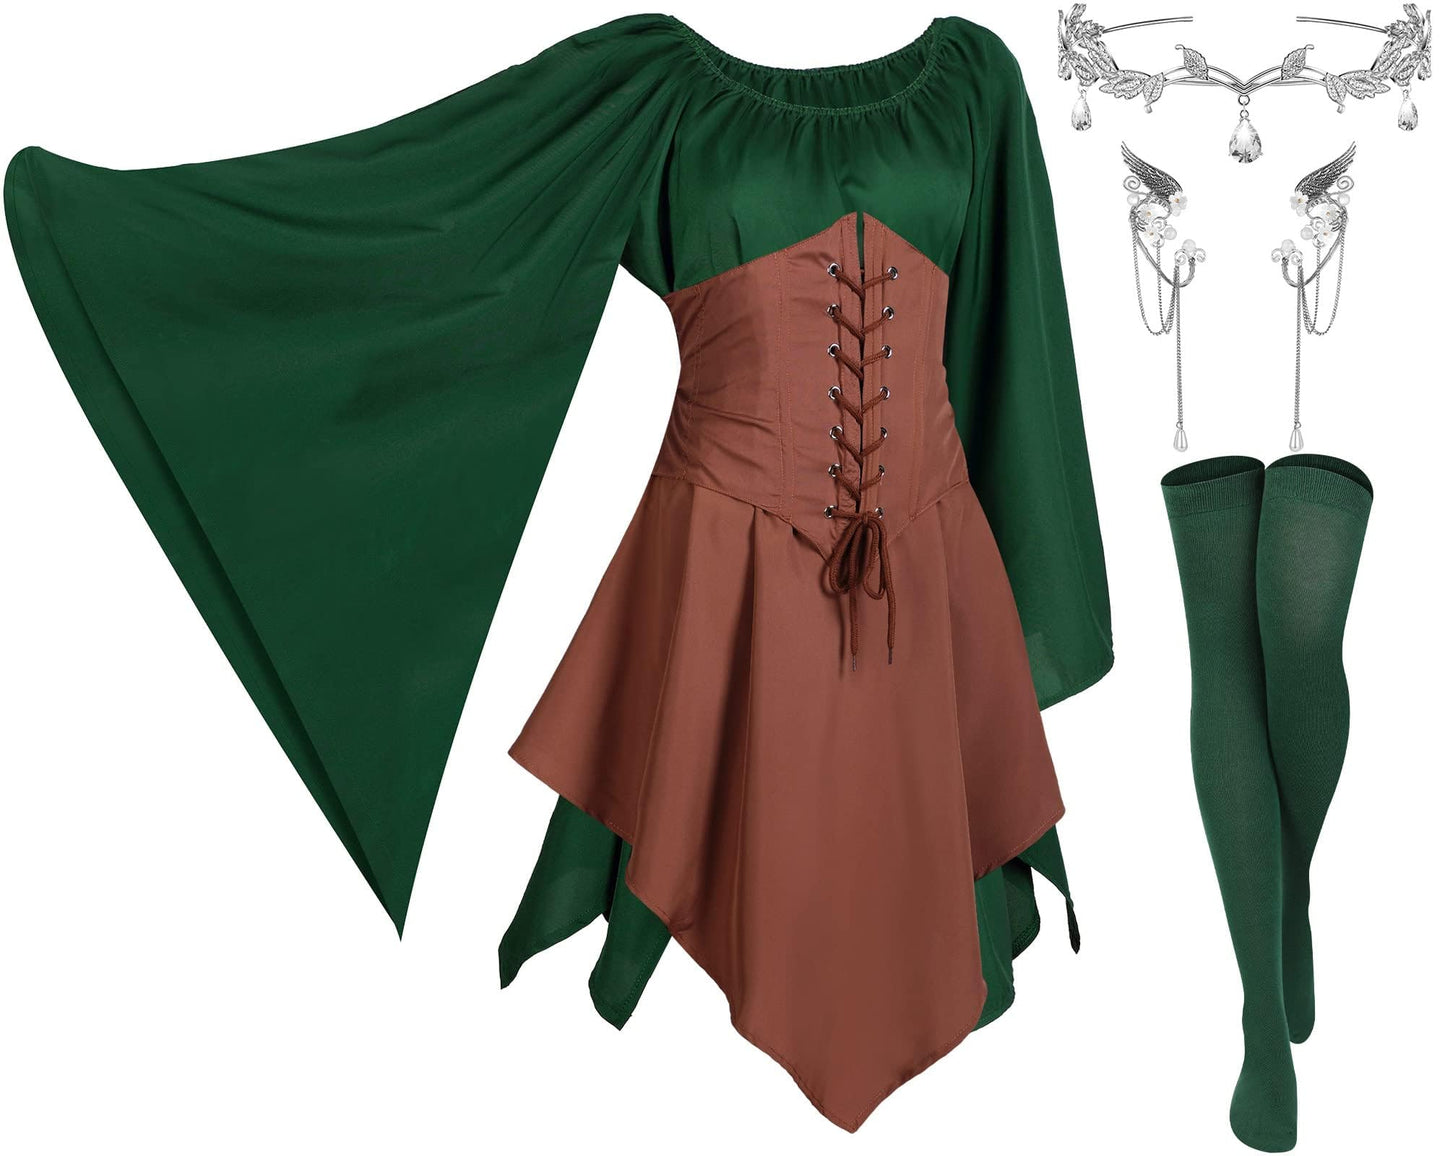 4 Pcs Women Elf Costume Renaissance Traditional Irish Dress Fairy Costume Elf Ear Cuffs for Women Halloween Cosplay Party Green, Brown 2X-Large